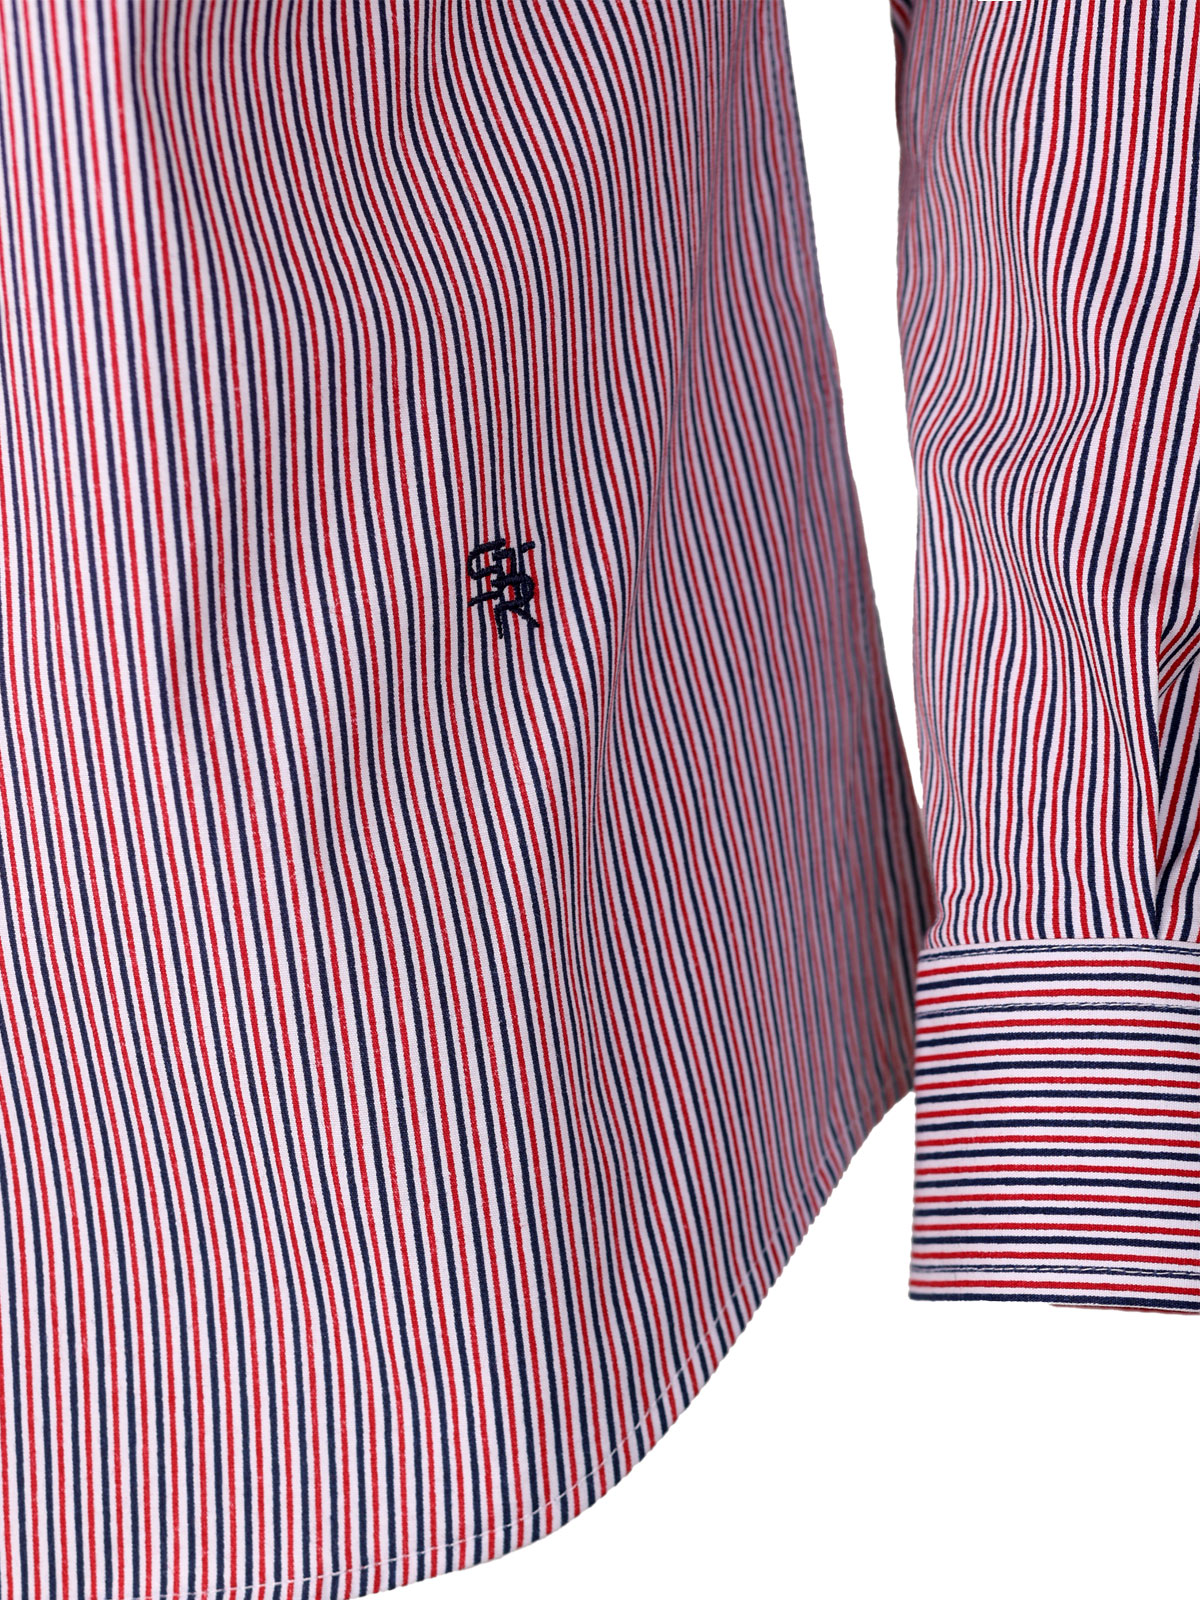 Shirt multicolored fine stripe - 21608 € 44.43 img3